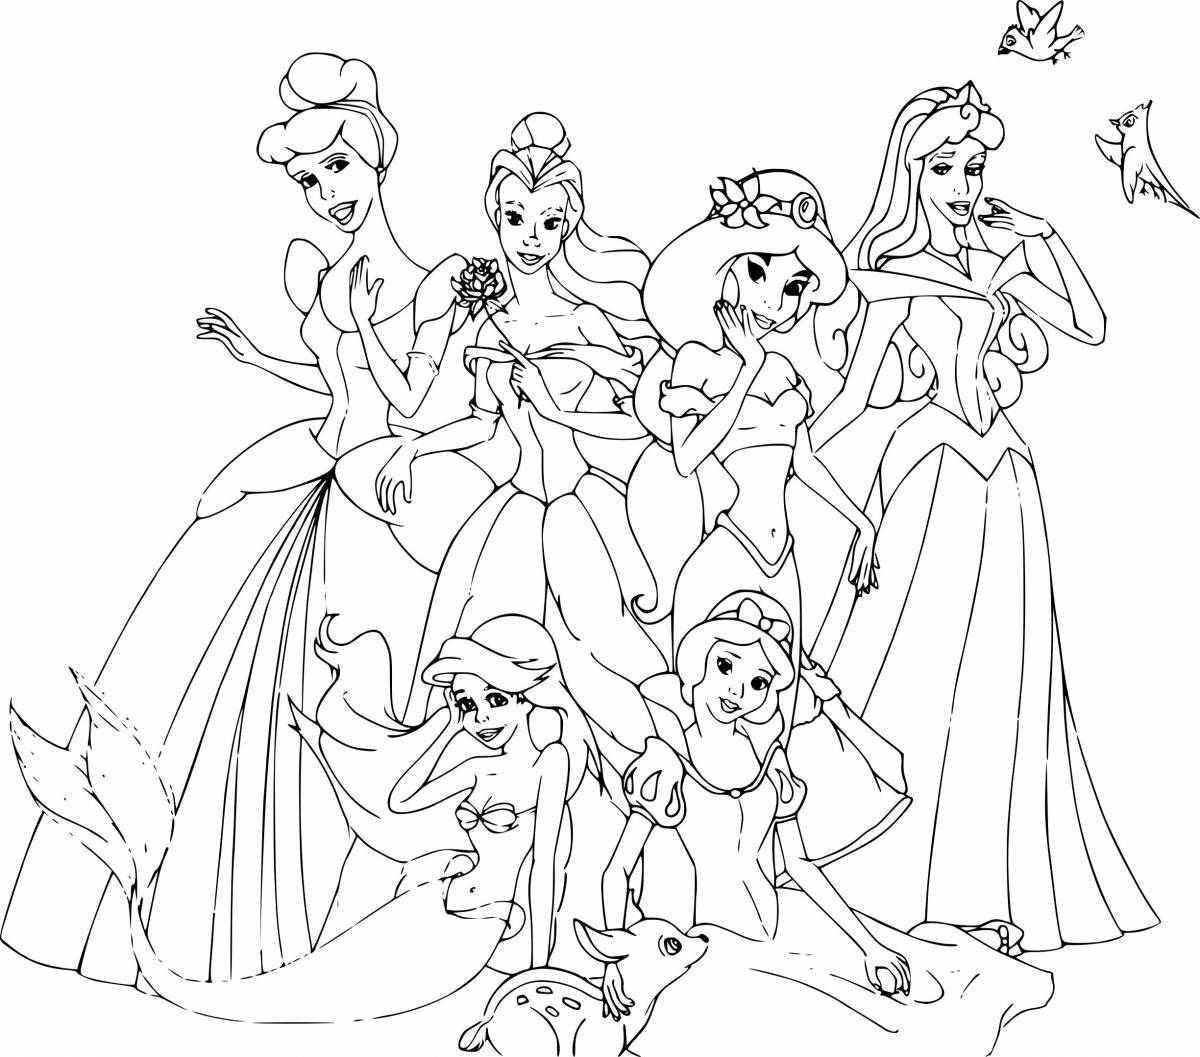 Fun princess coloring pages new